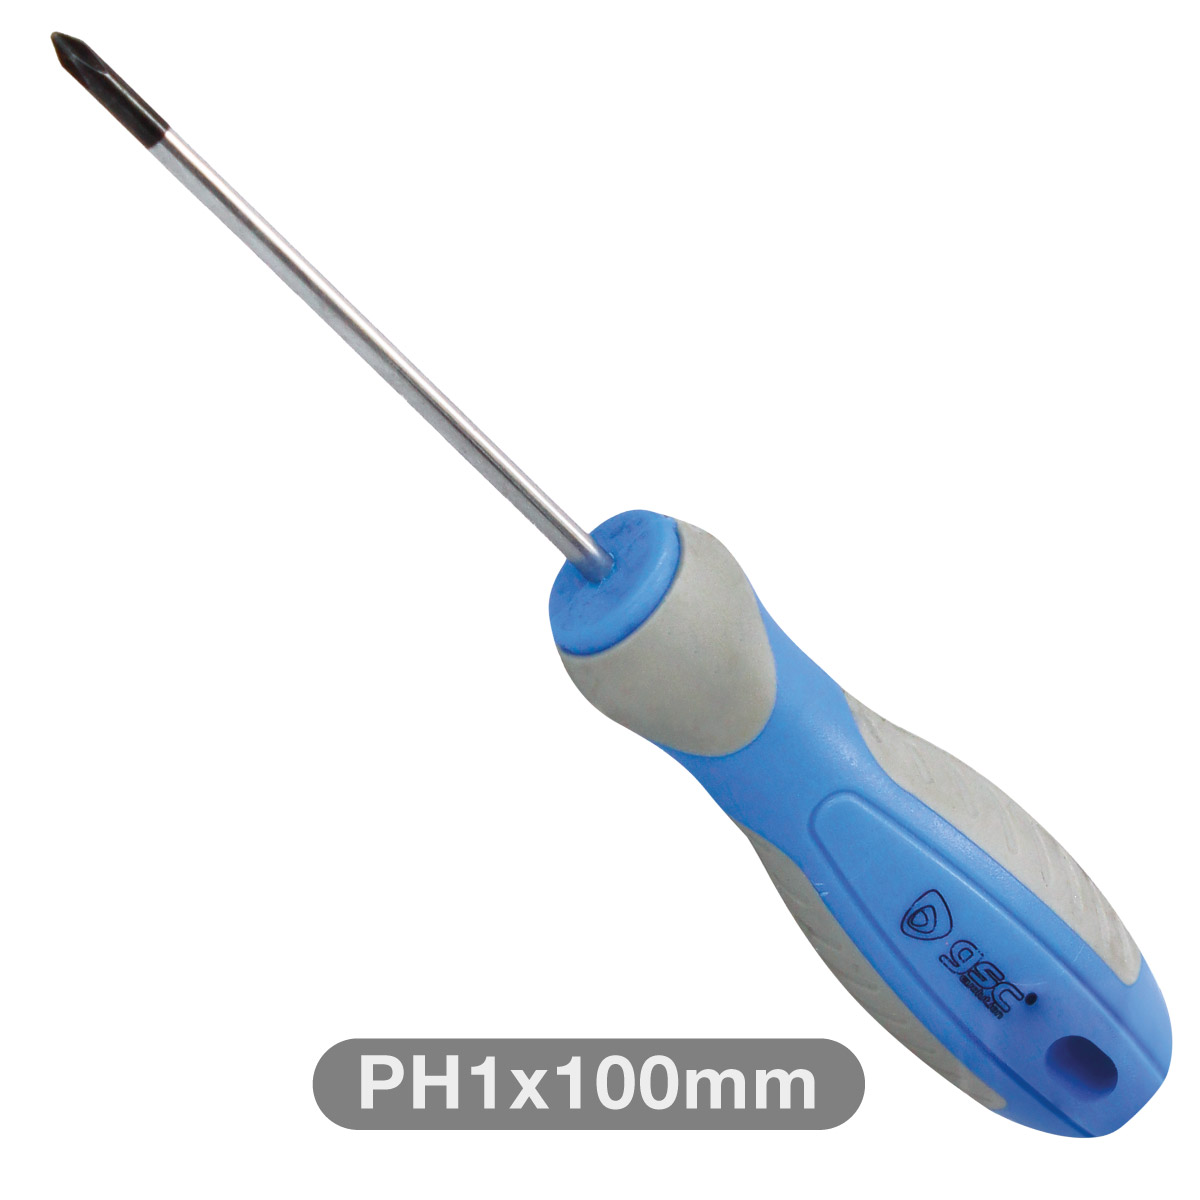 Philips screwdriver PH1x100mm